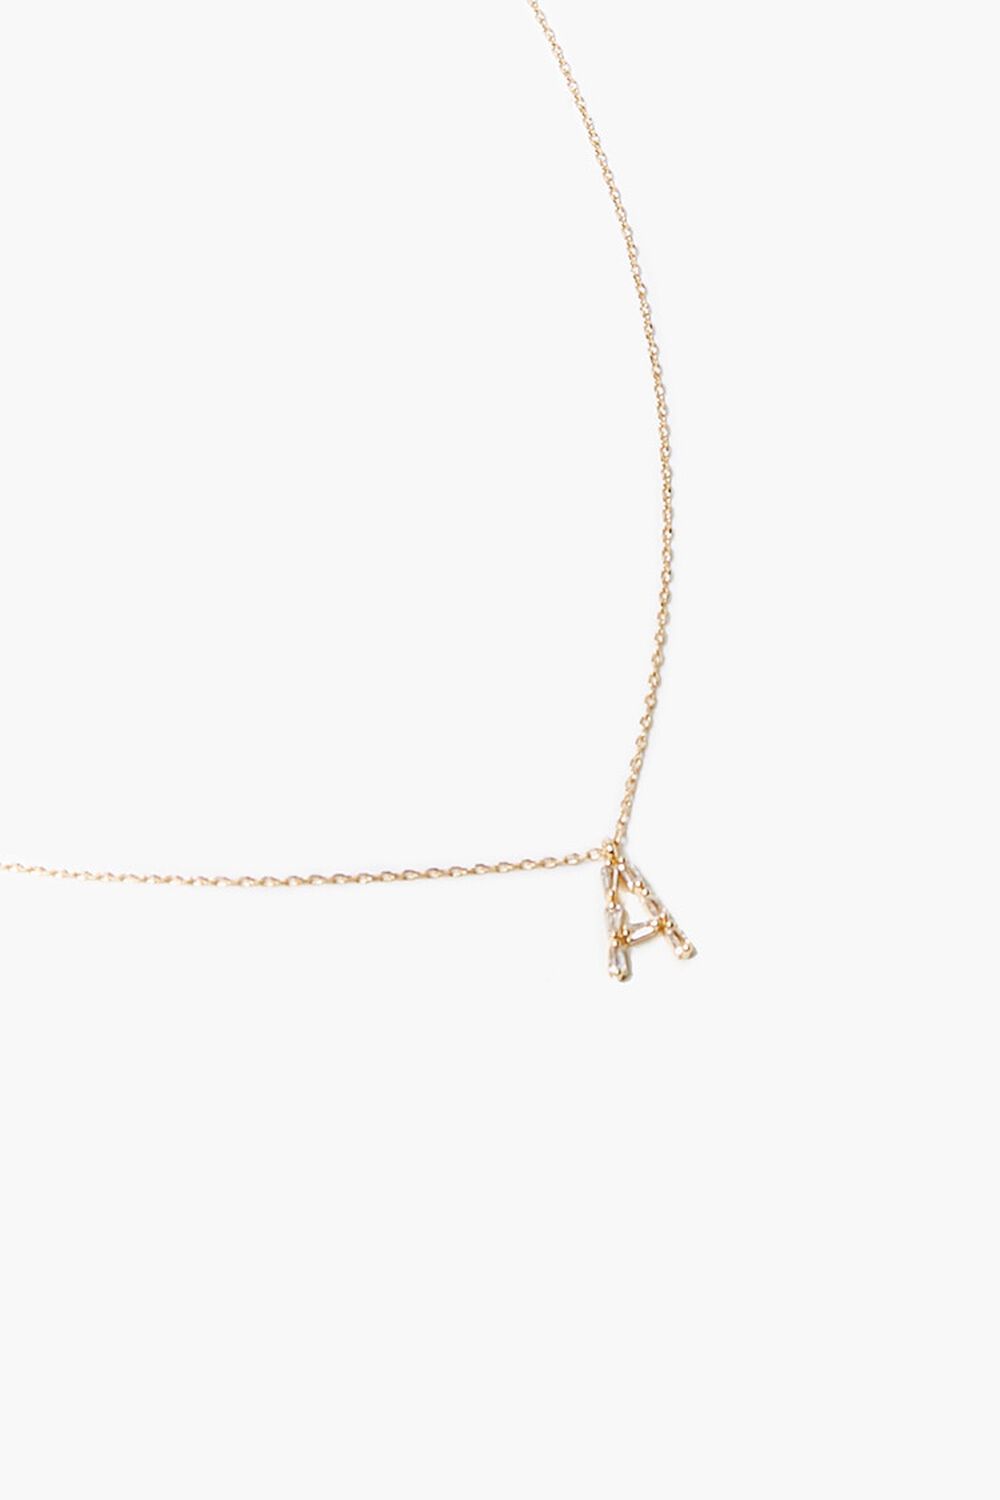 GOLD/A Letter Pendant Necklace, image 1